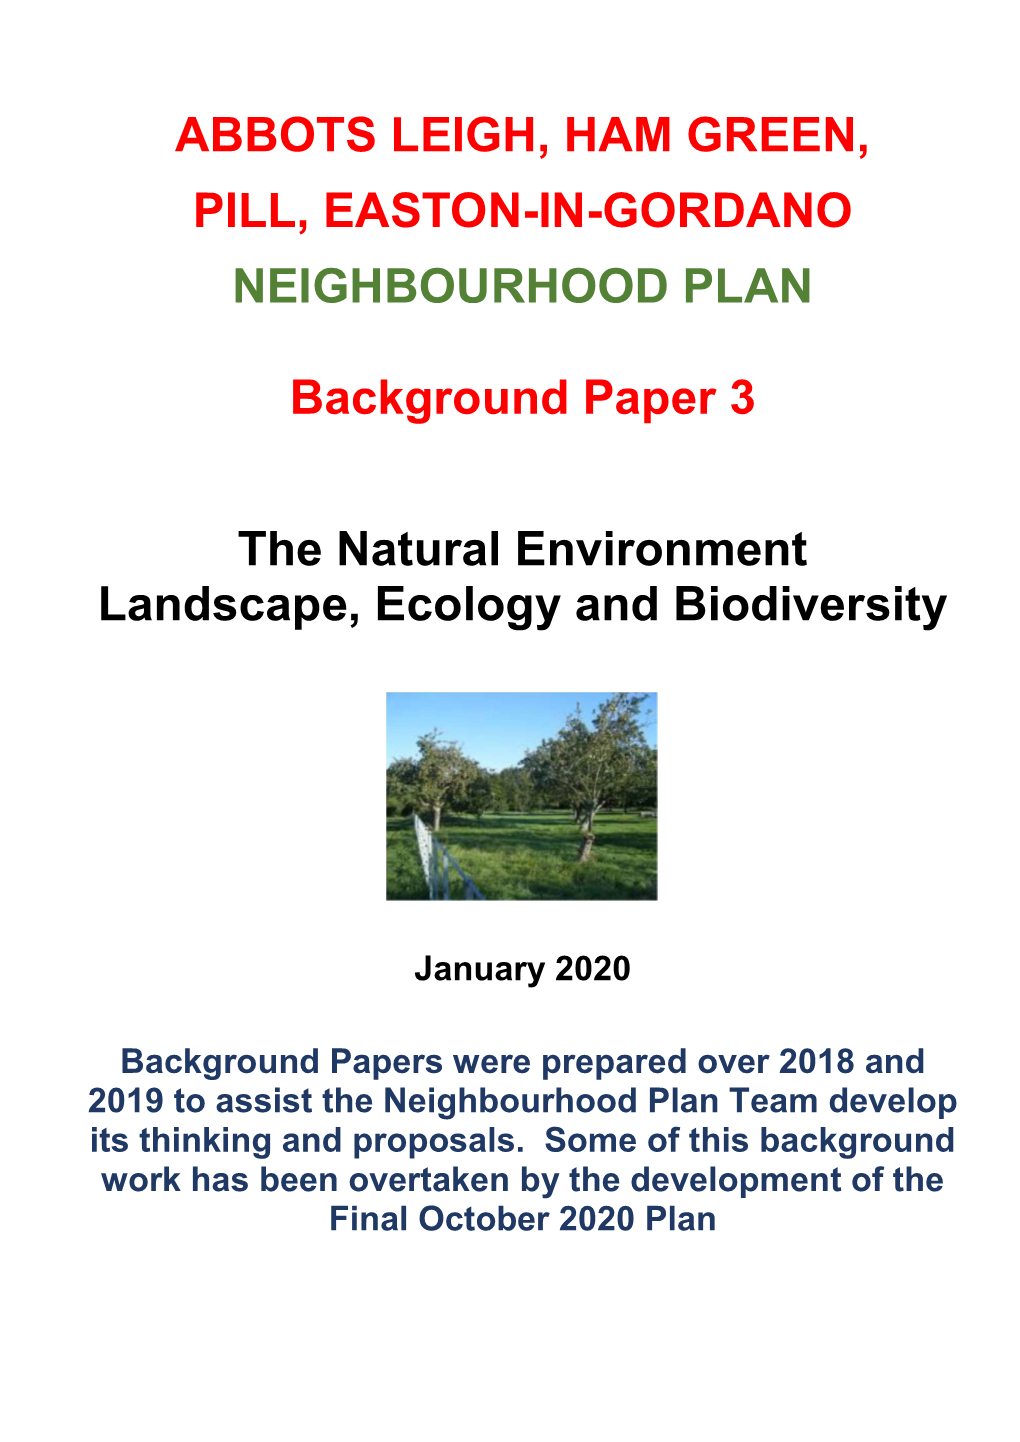 ABBOTS LEIGH, HAM GREEN, PILL, EASTON-IN-GORDANO NEIGHBOURHOOD PLAN Background Paper 3 the Natural Environment Landsca